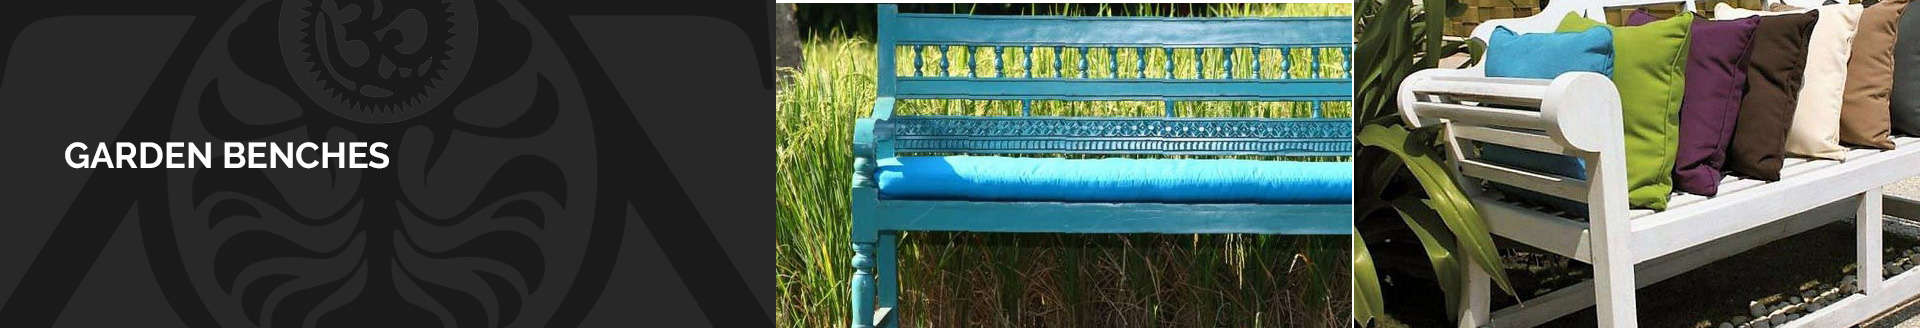 garden benches catalogue manufacturers indonesia exporters wholesalers suppliers bali java jepara zenddu